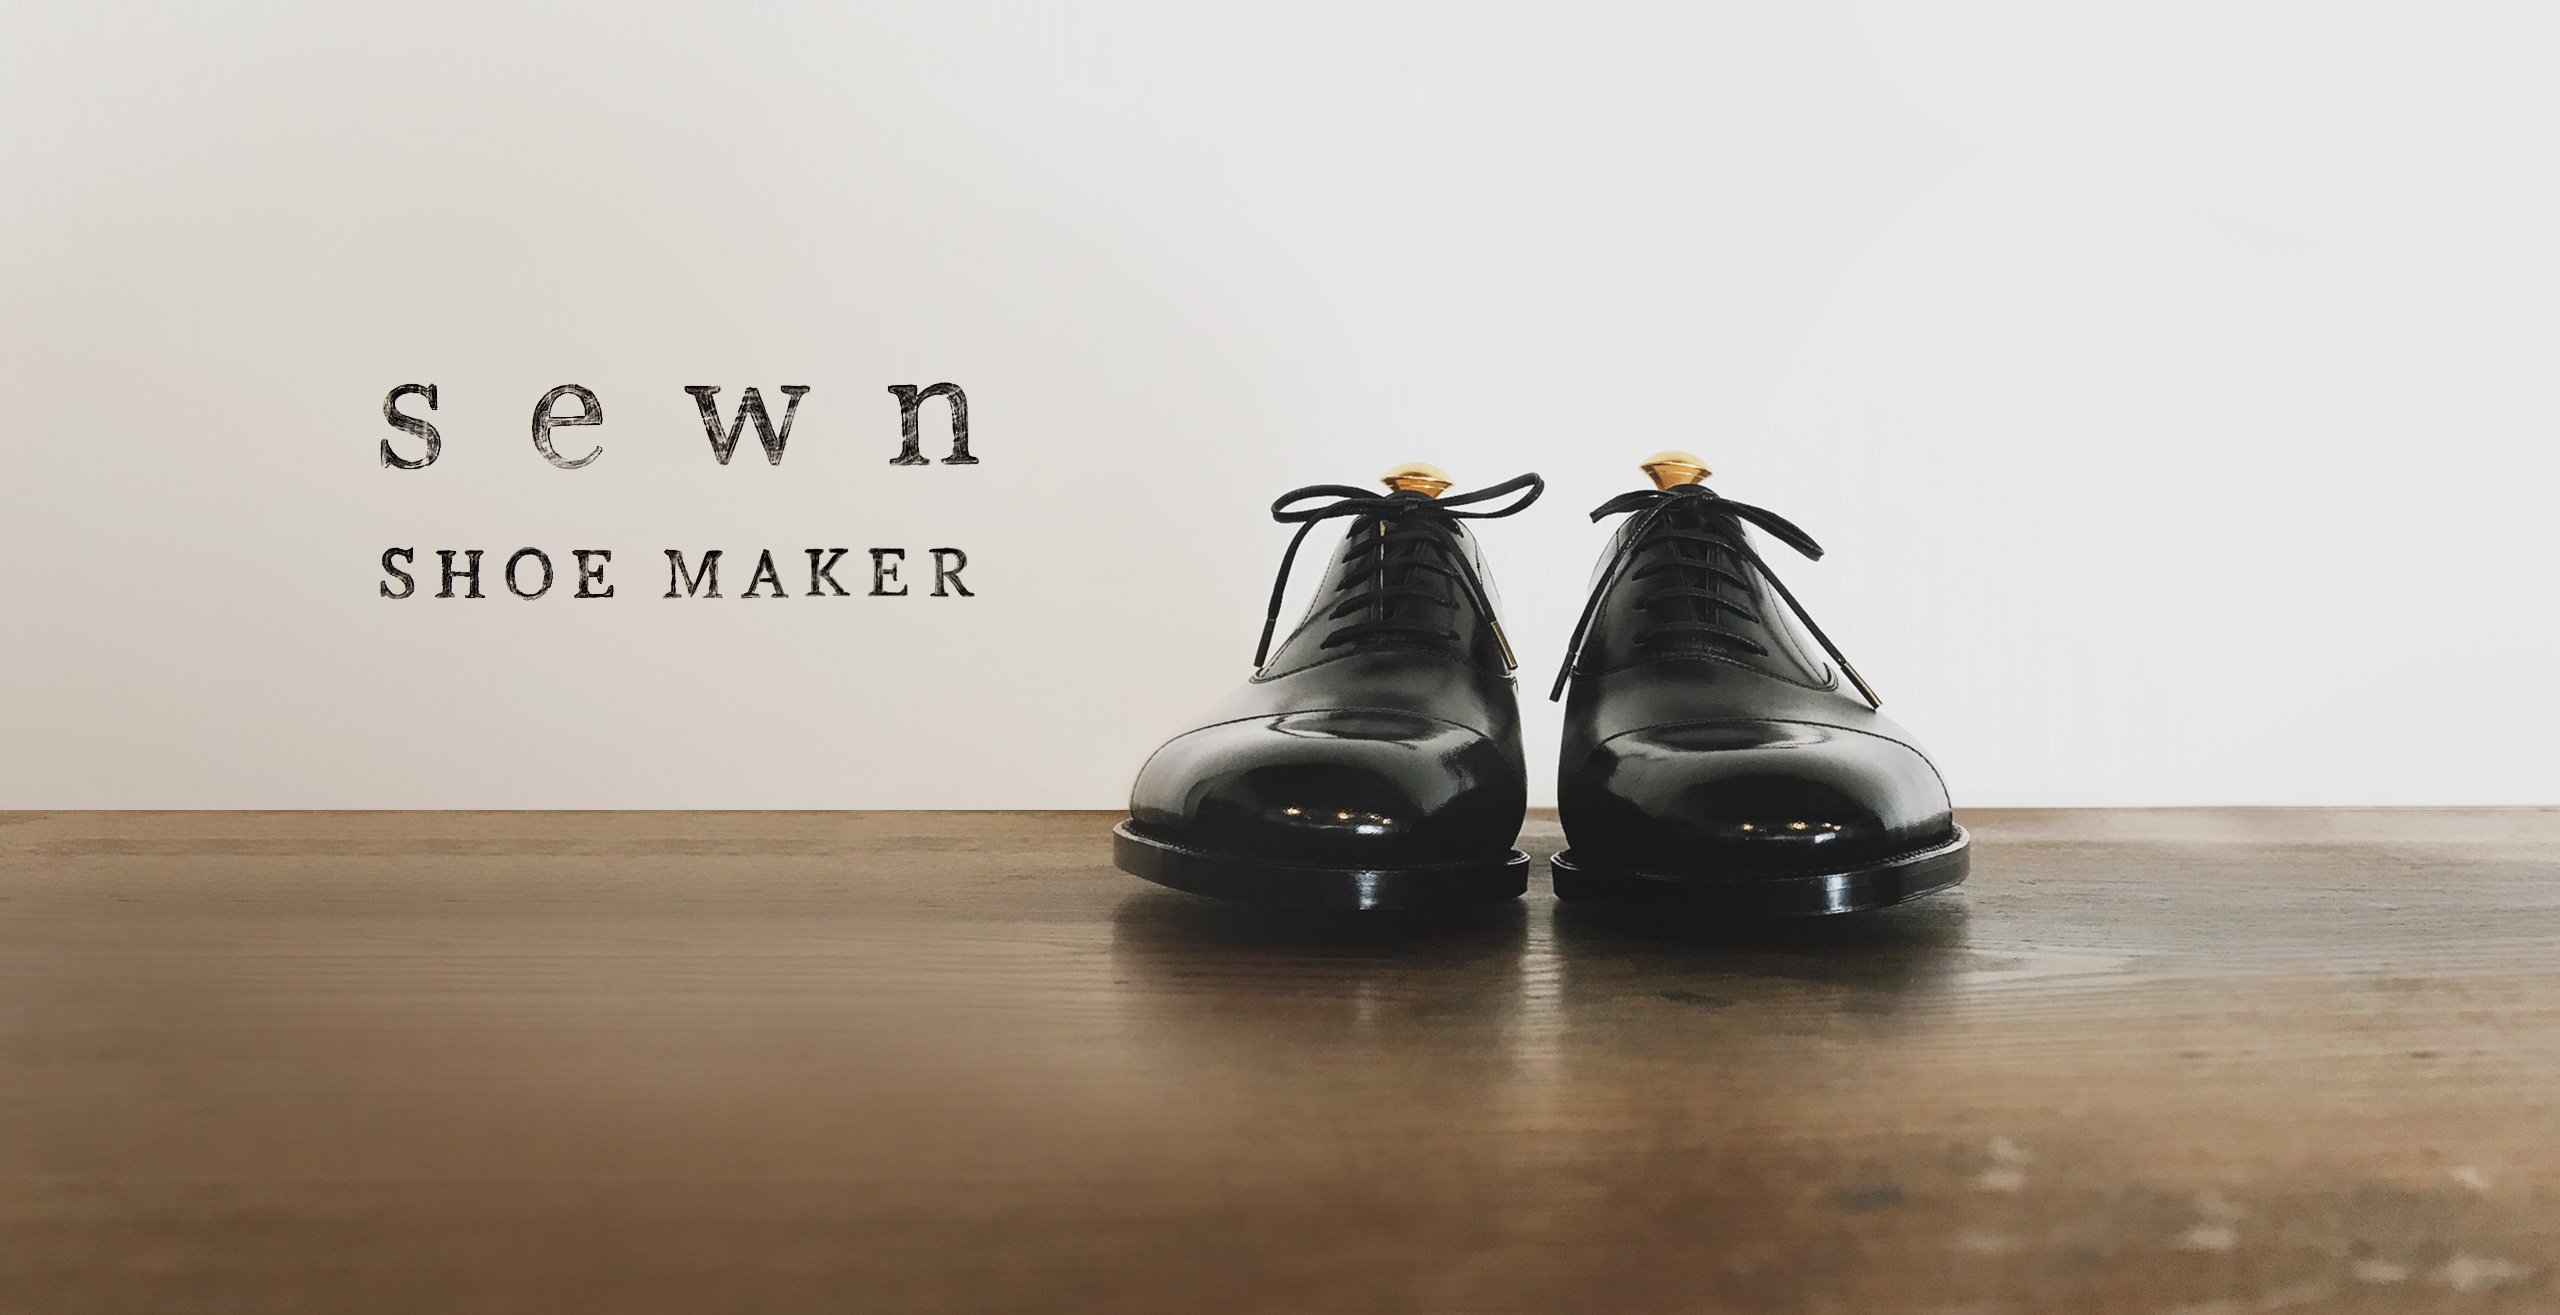 Sewn shoe-maker